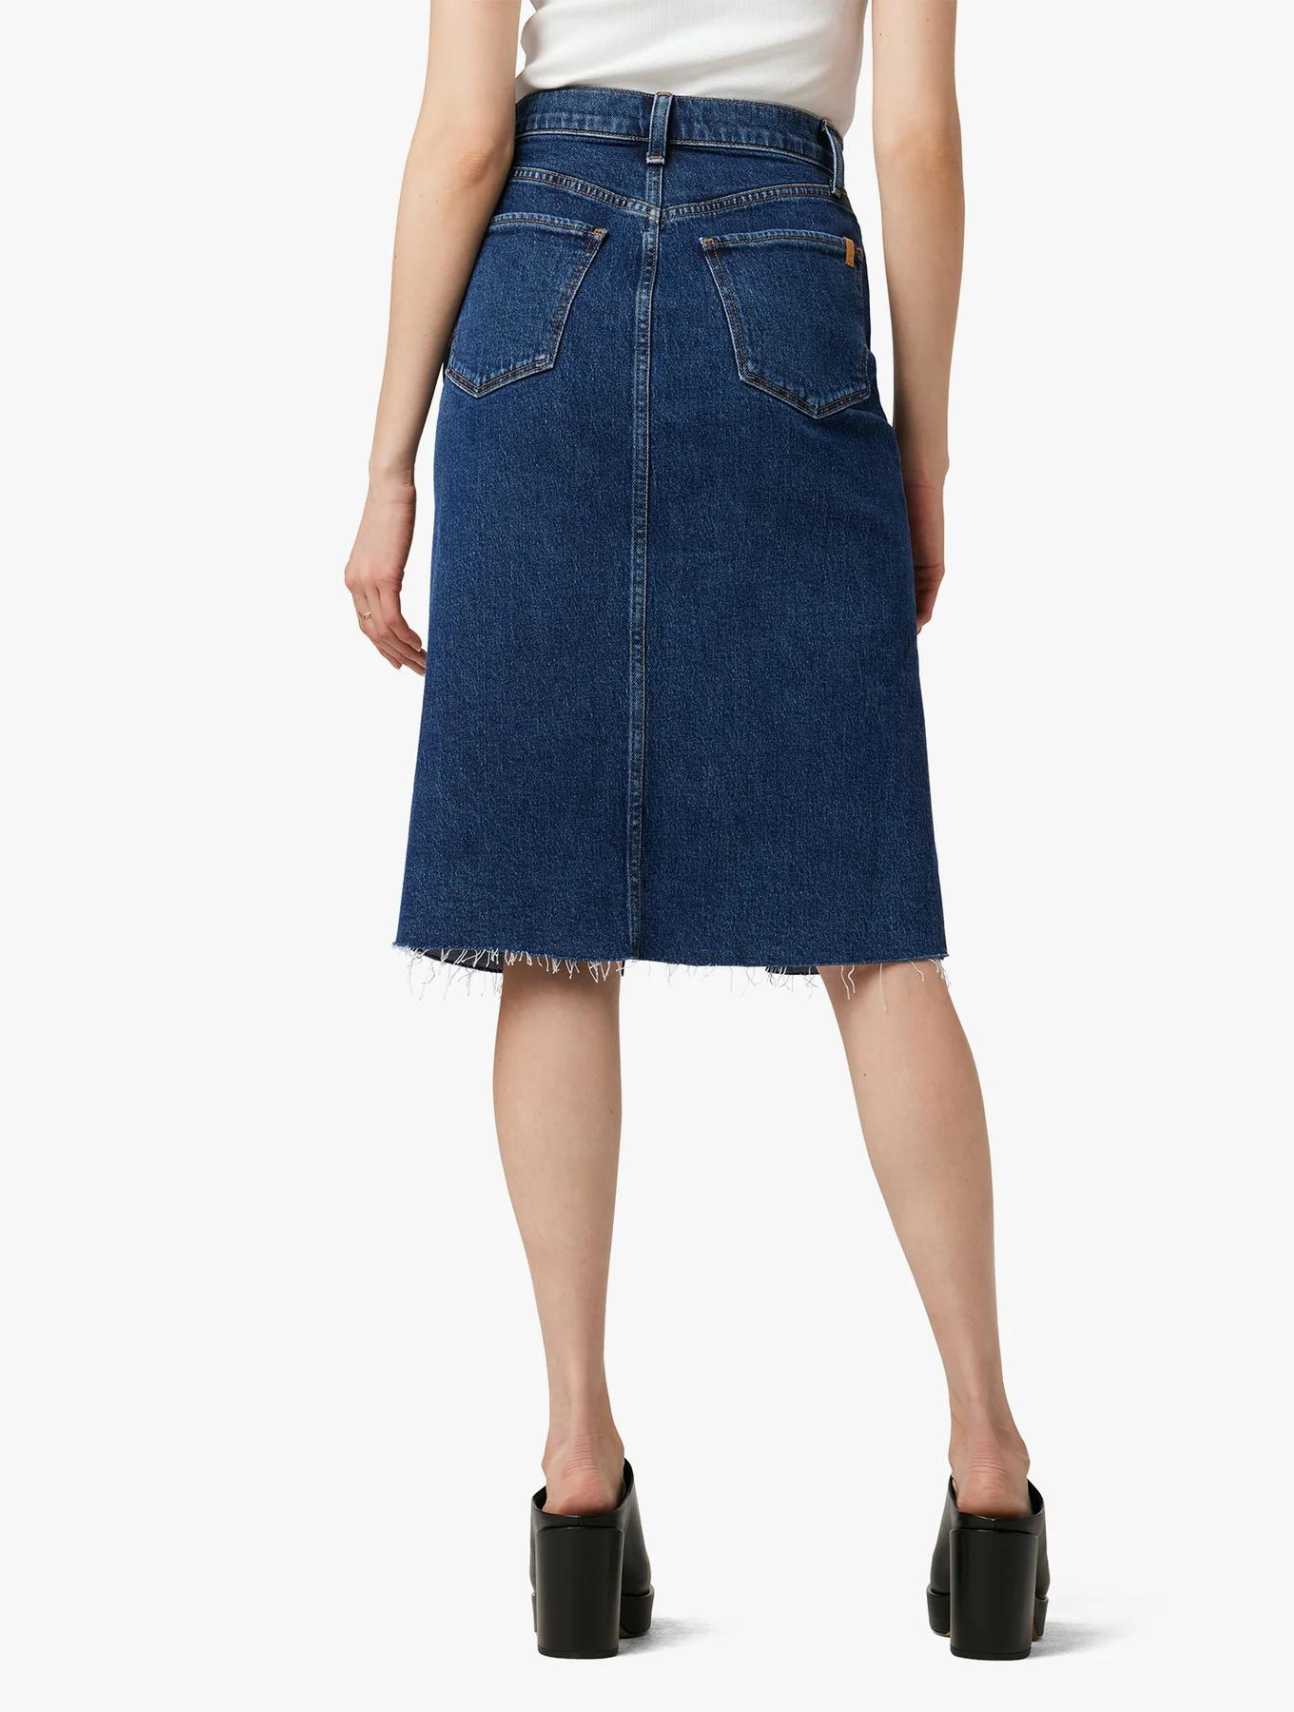 The Joplin Skirt